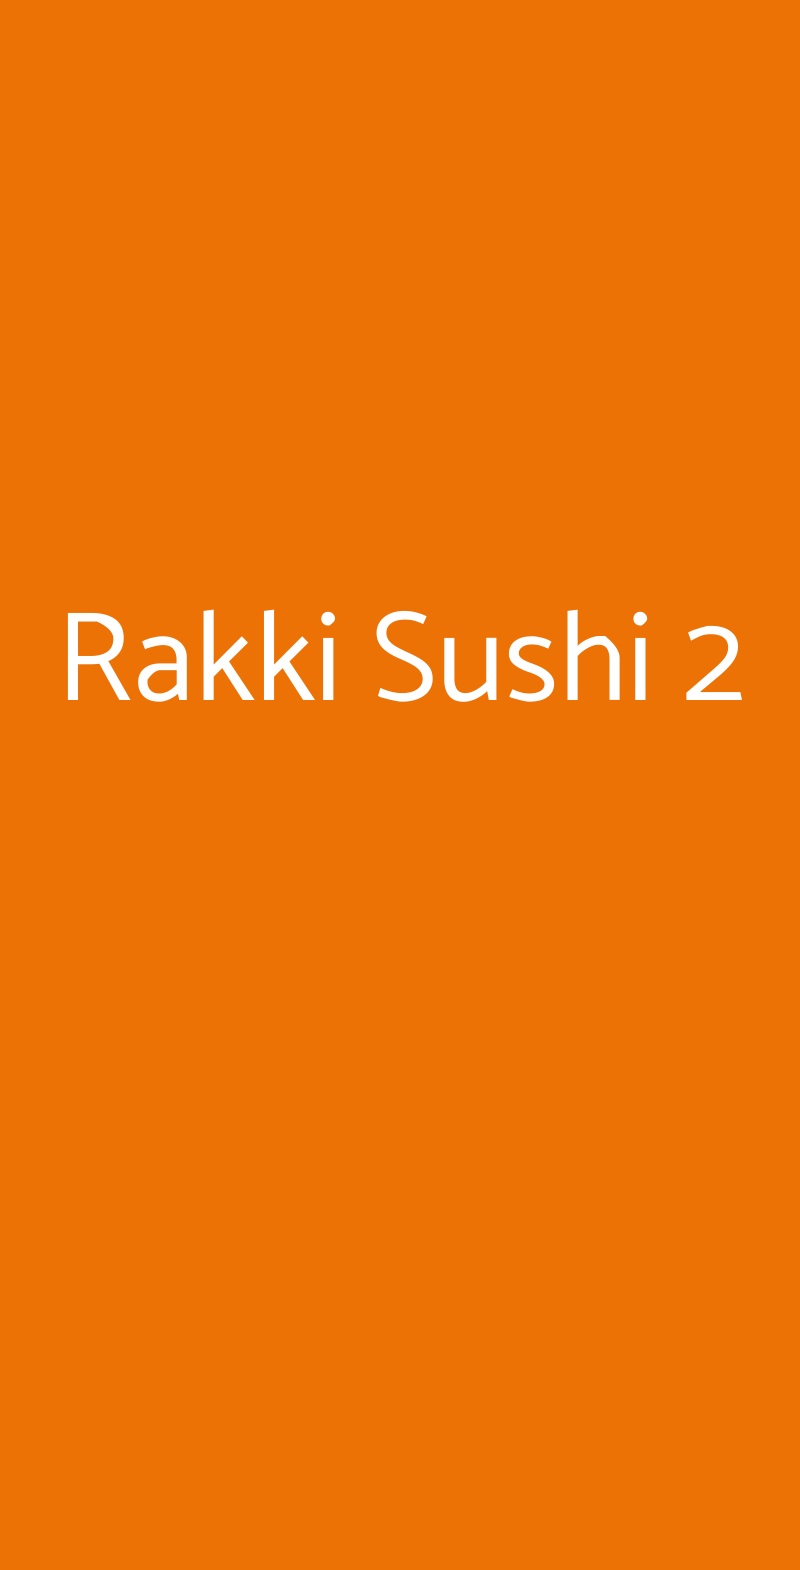 Rakki Sushi 2 Milano menù 1 pagina